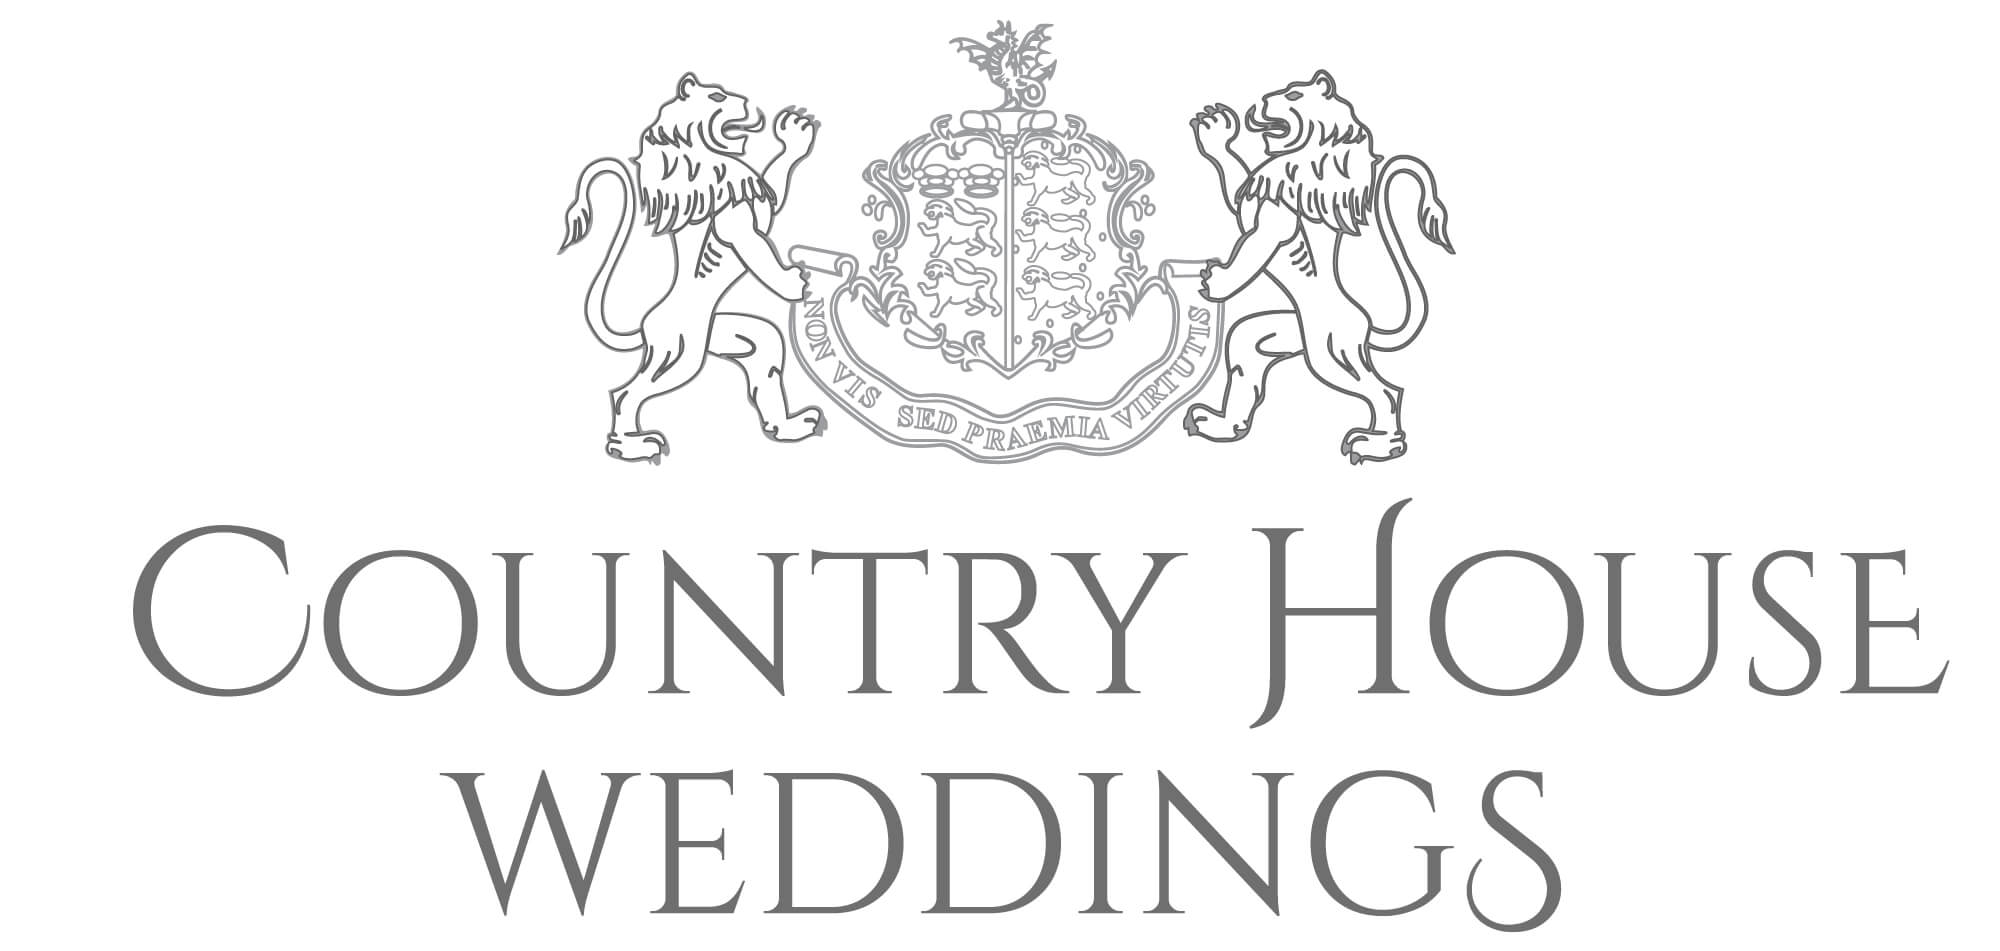 Country House Weddings logo